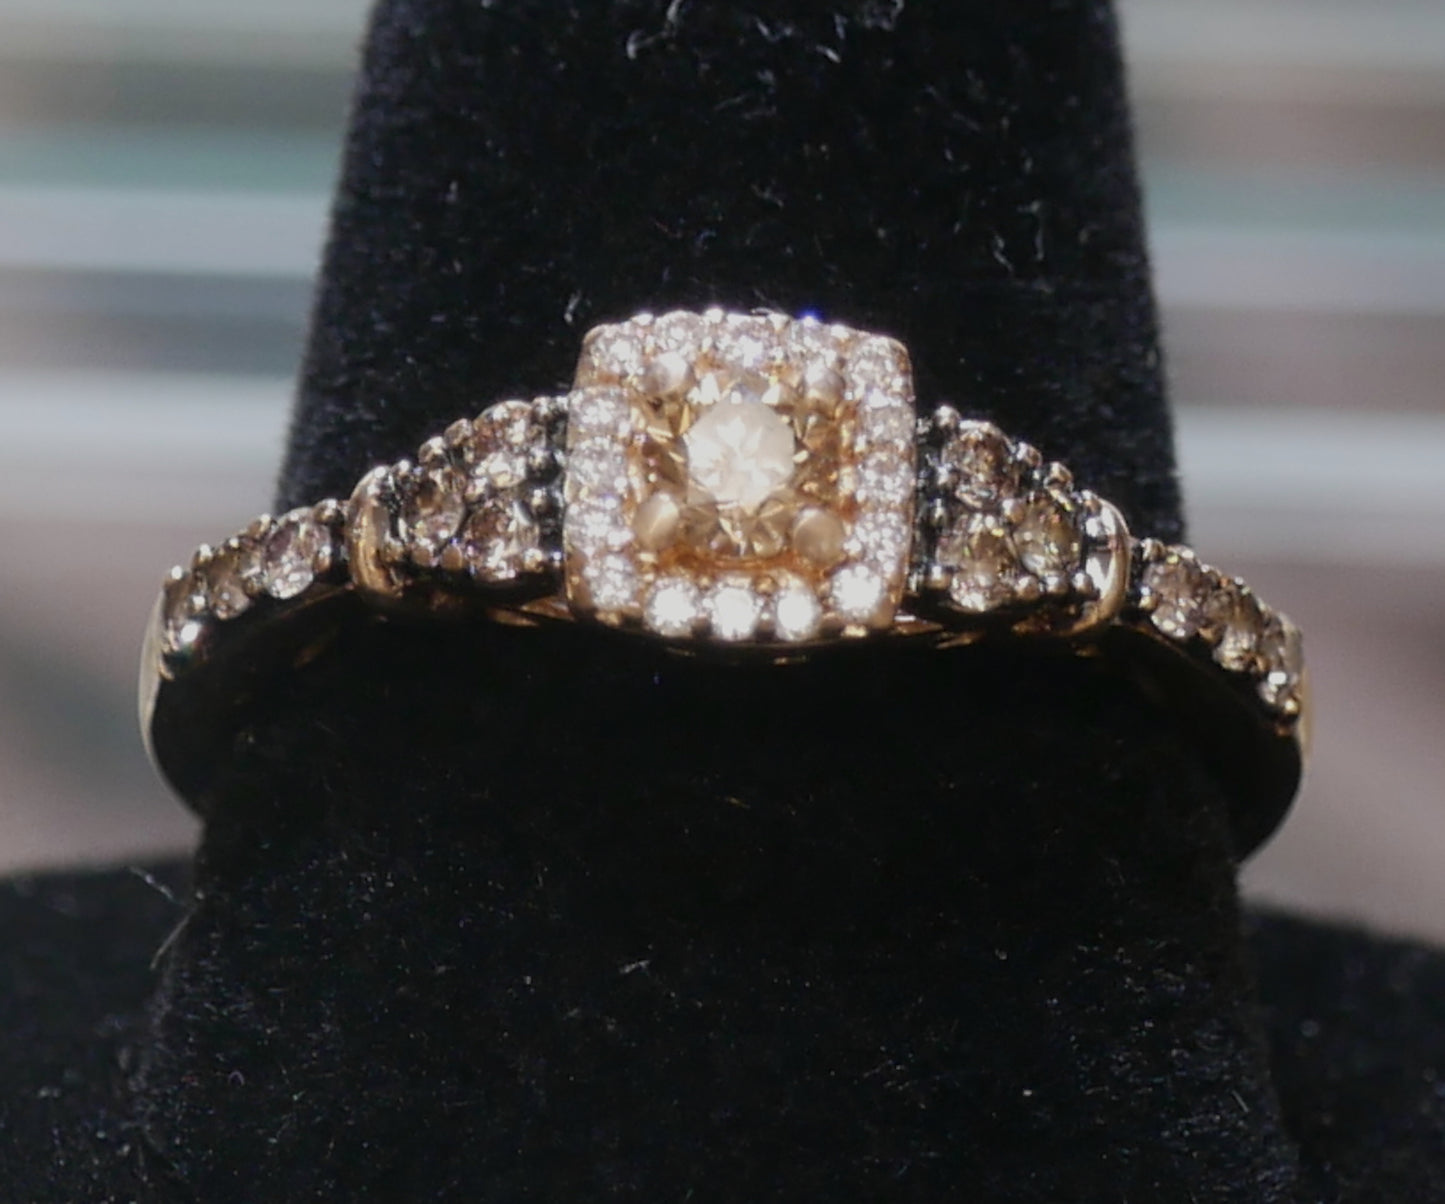 1 Carat Rose Gold Diamond Ring with 14K Yellow Gold Band